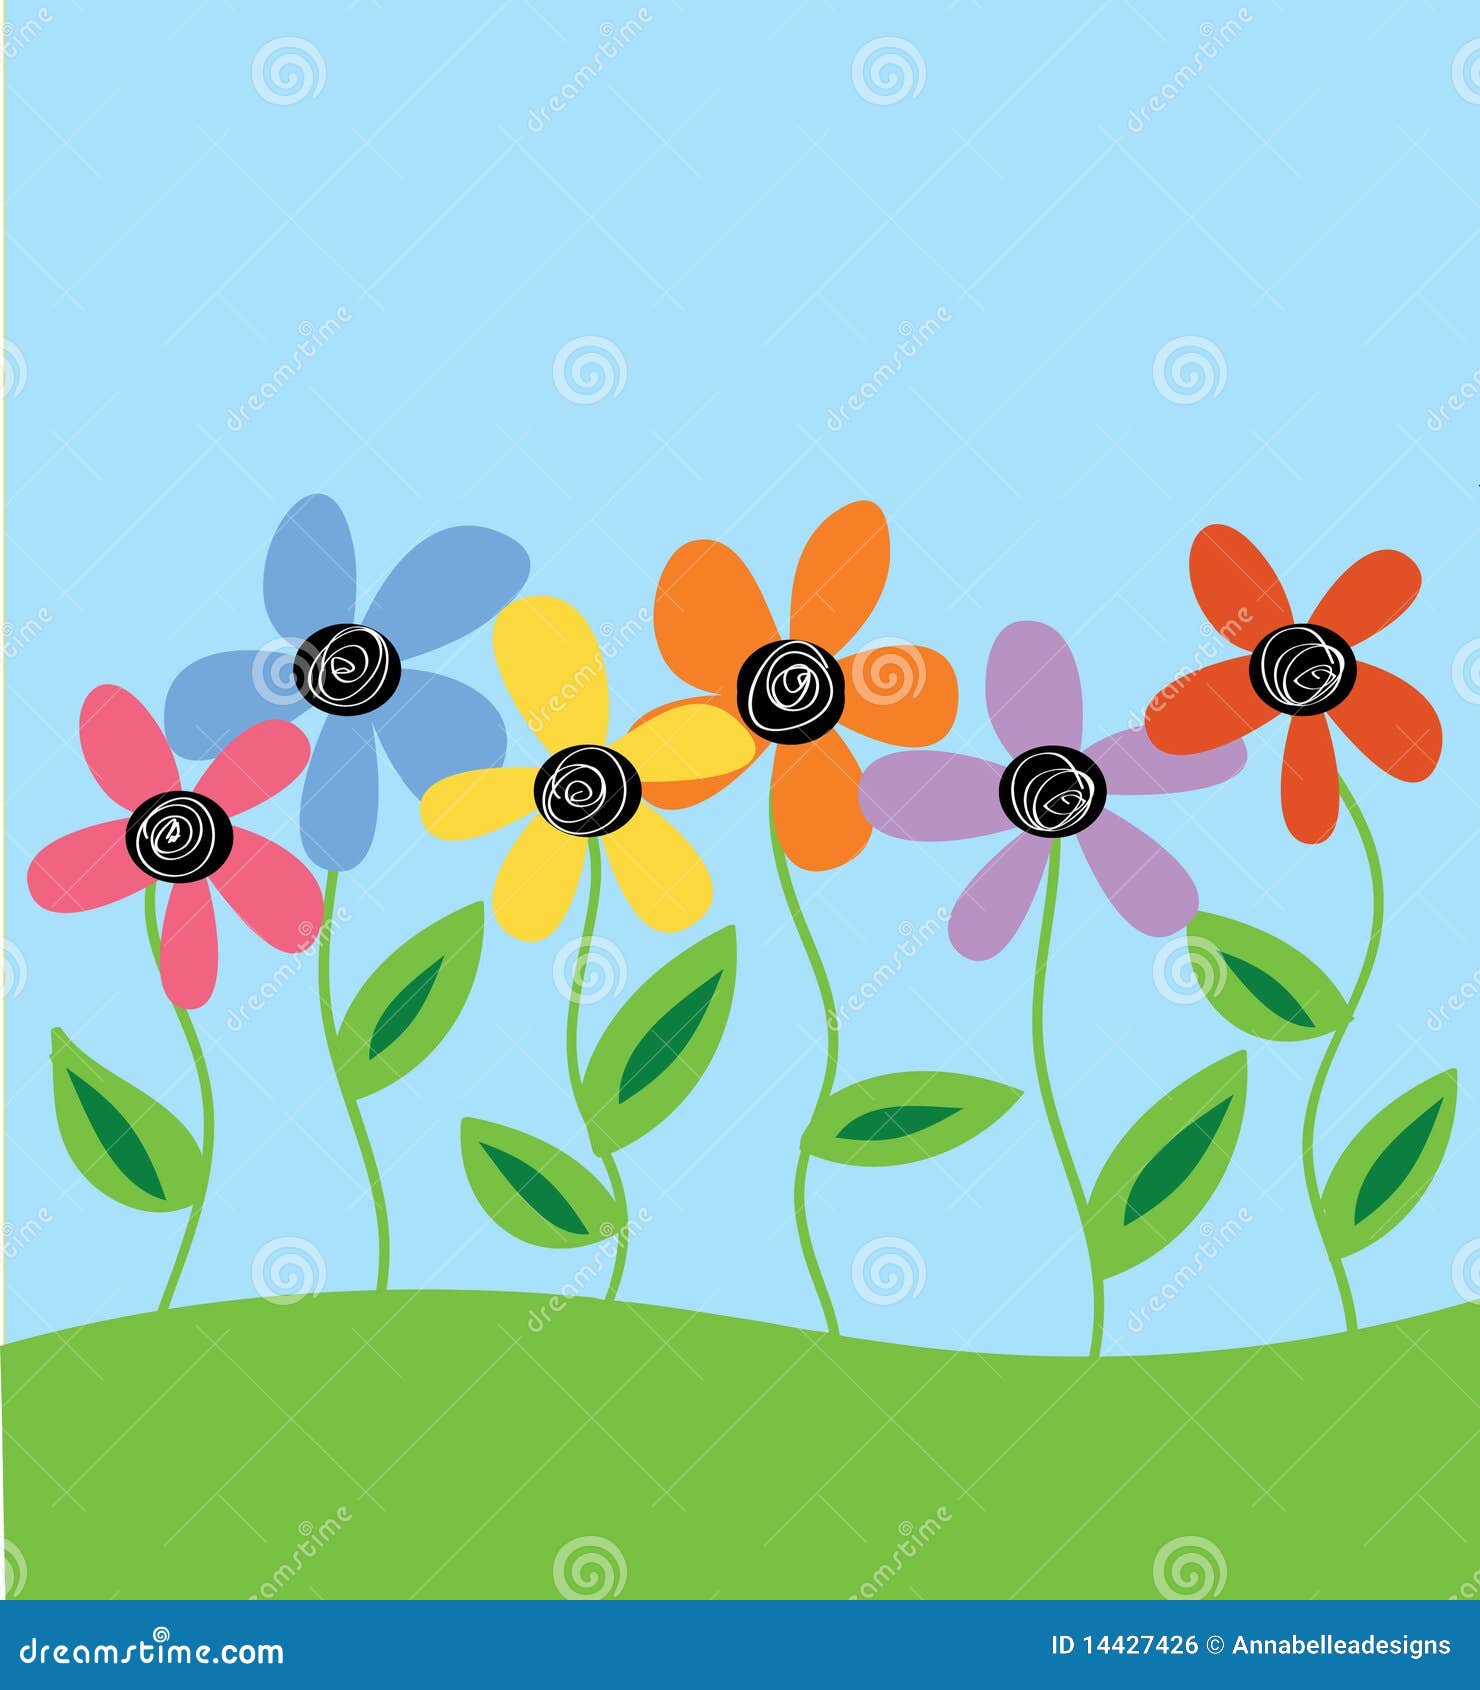 Hand Drawn Flowers in Field Stock Illustration - Illustration of summer